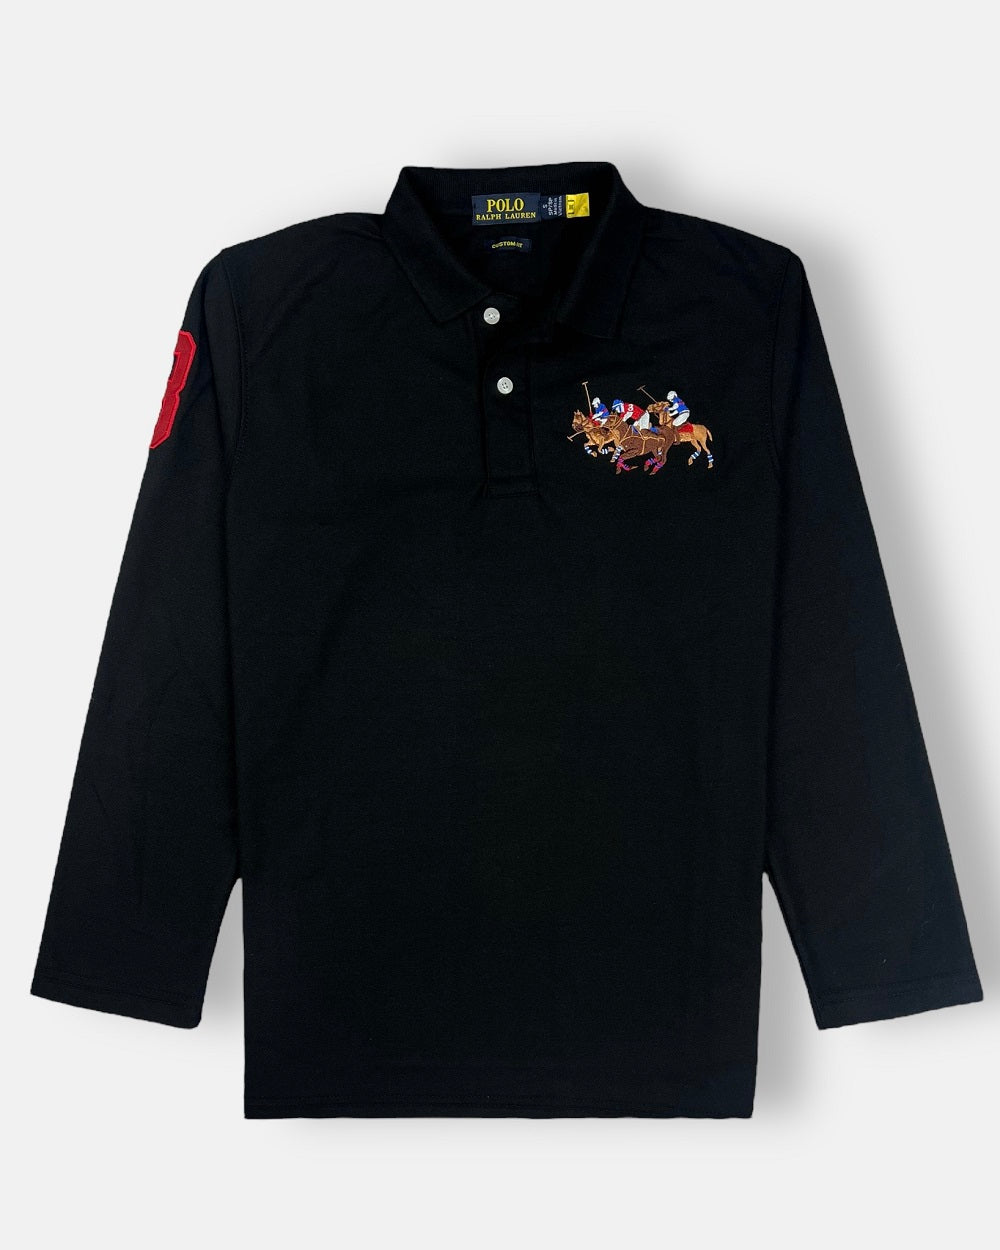 RL 3 Horses Full-Sleeve Polo Shirt (Black)